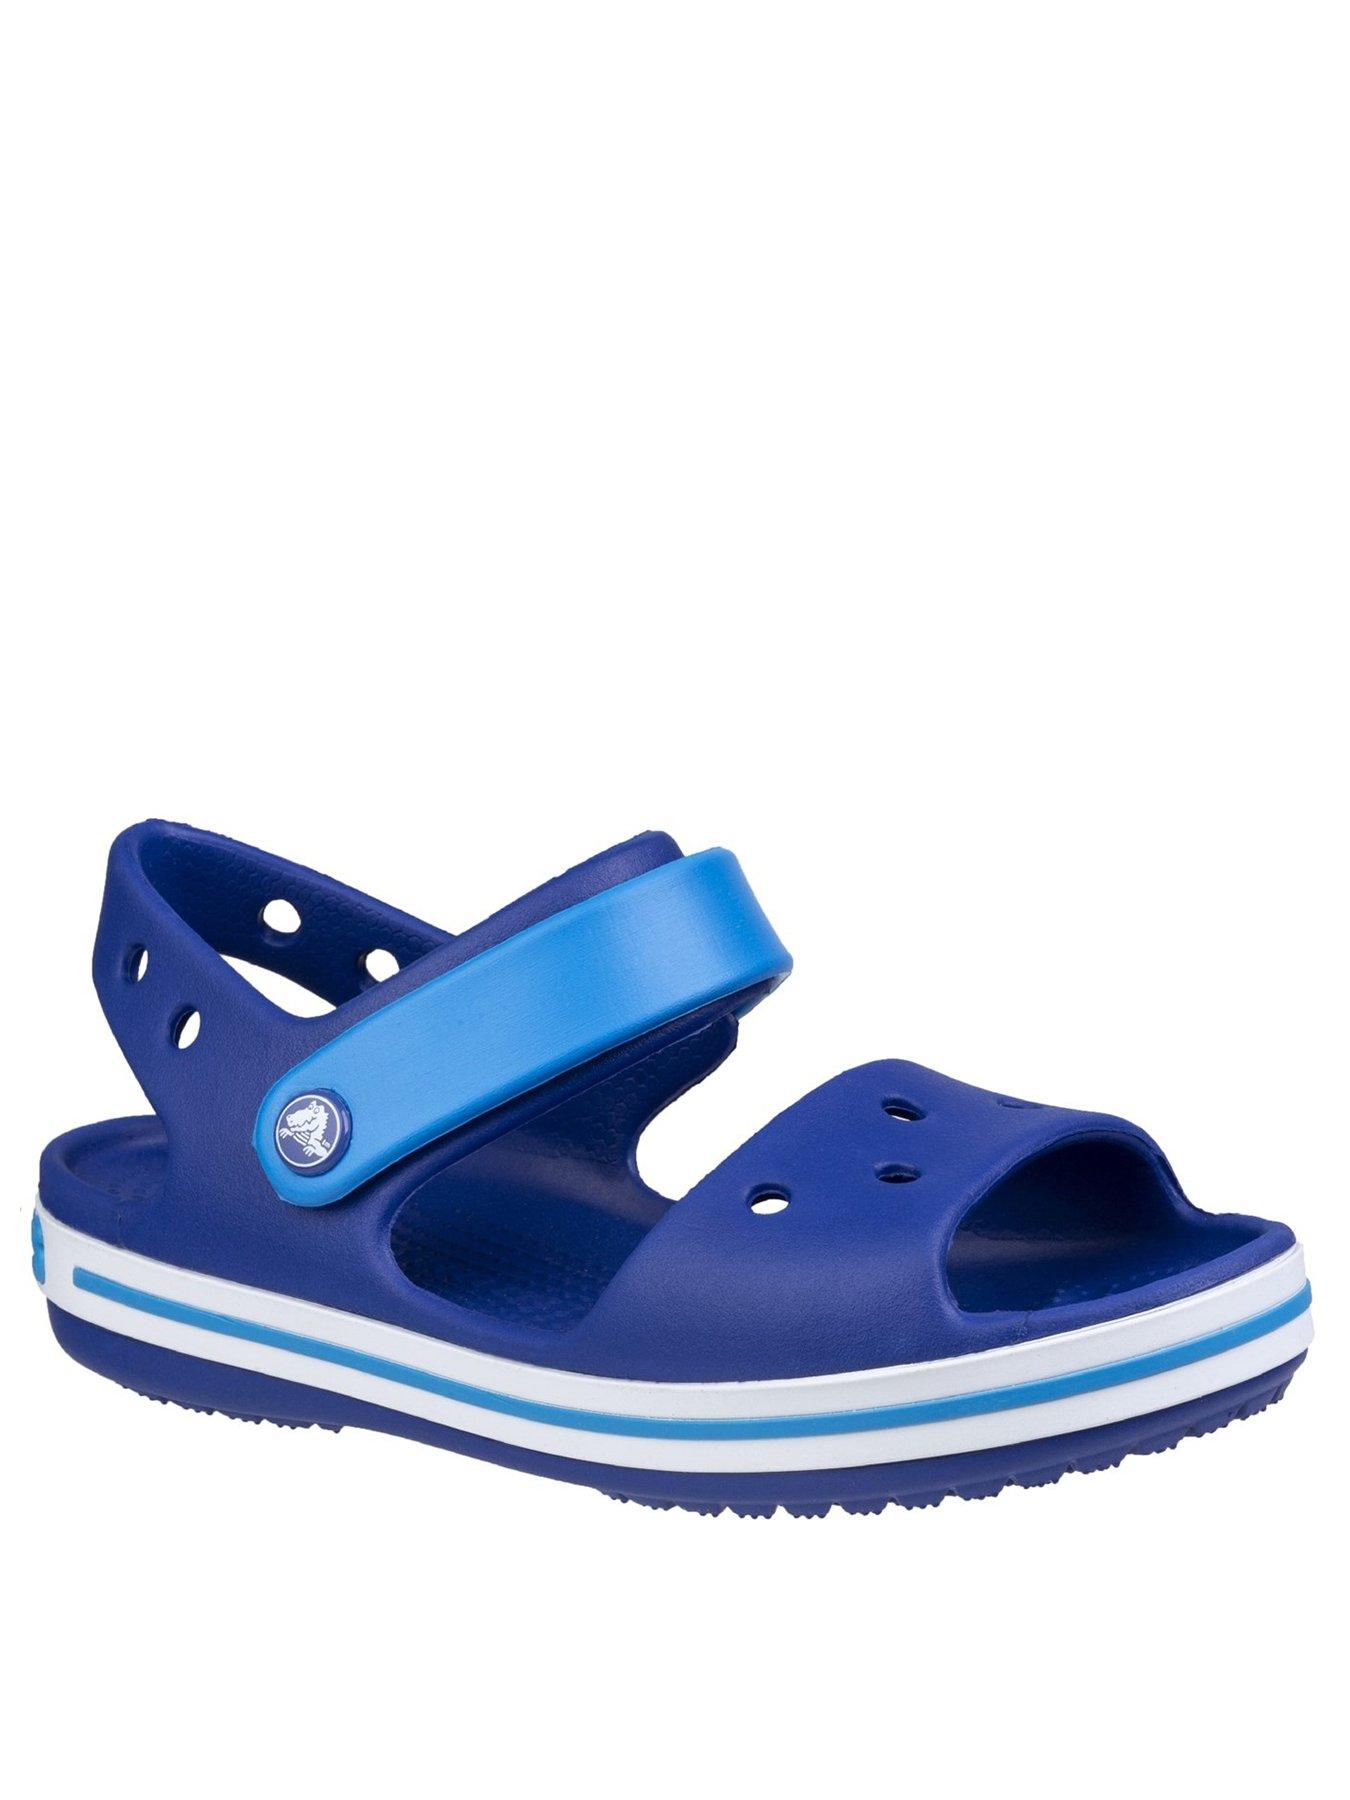 Crocs Crocband Sandal, Blue, Size 11 Younger